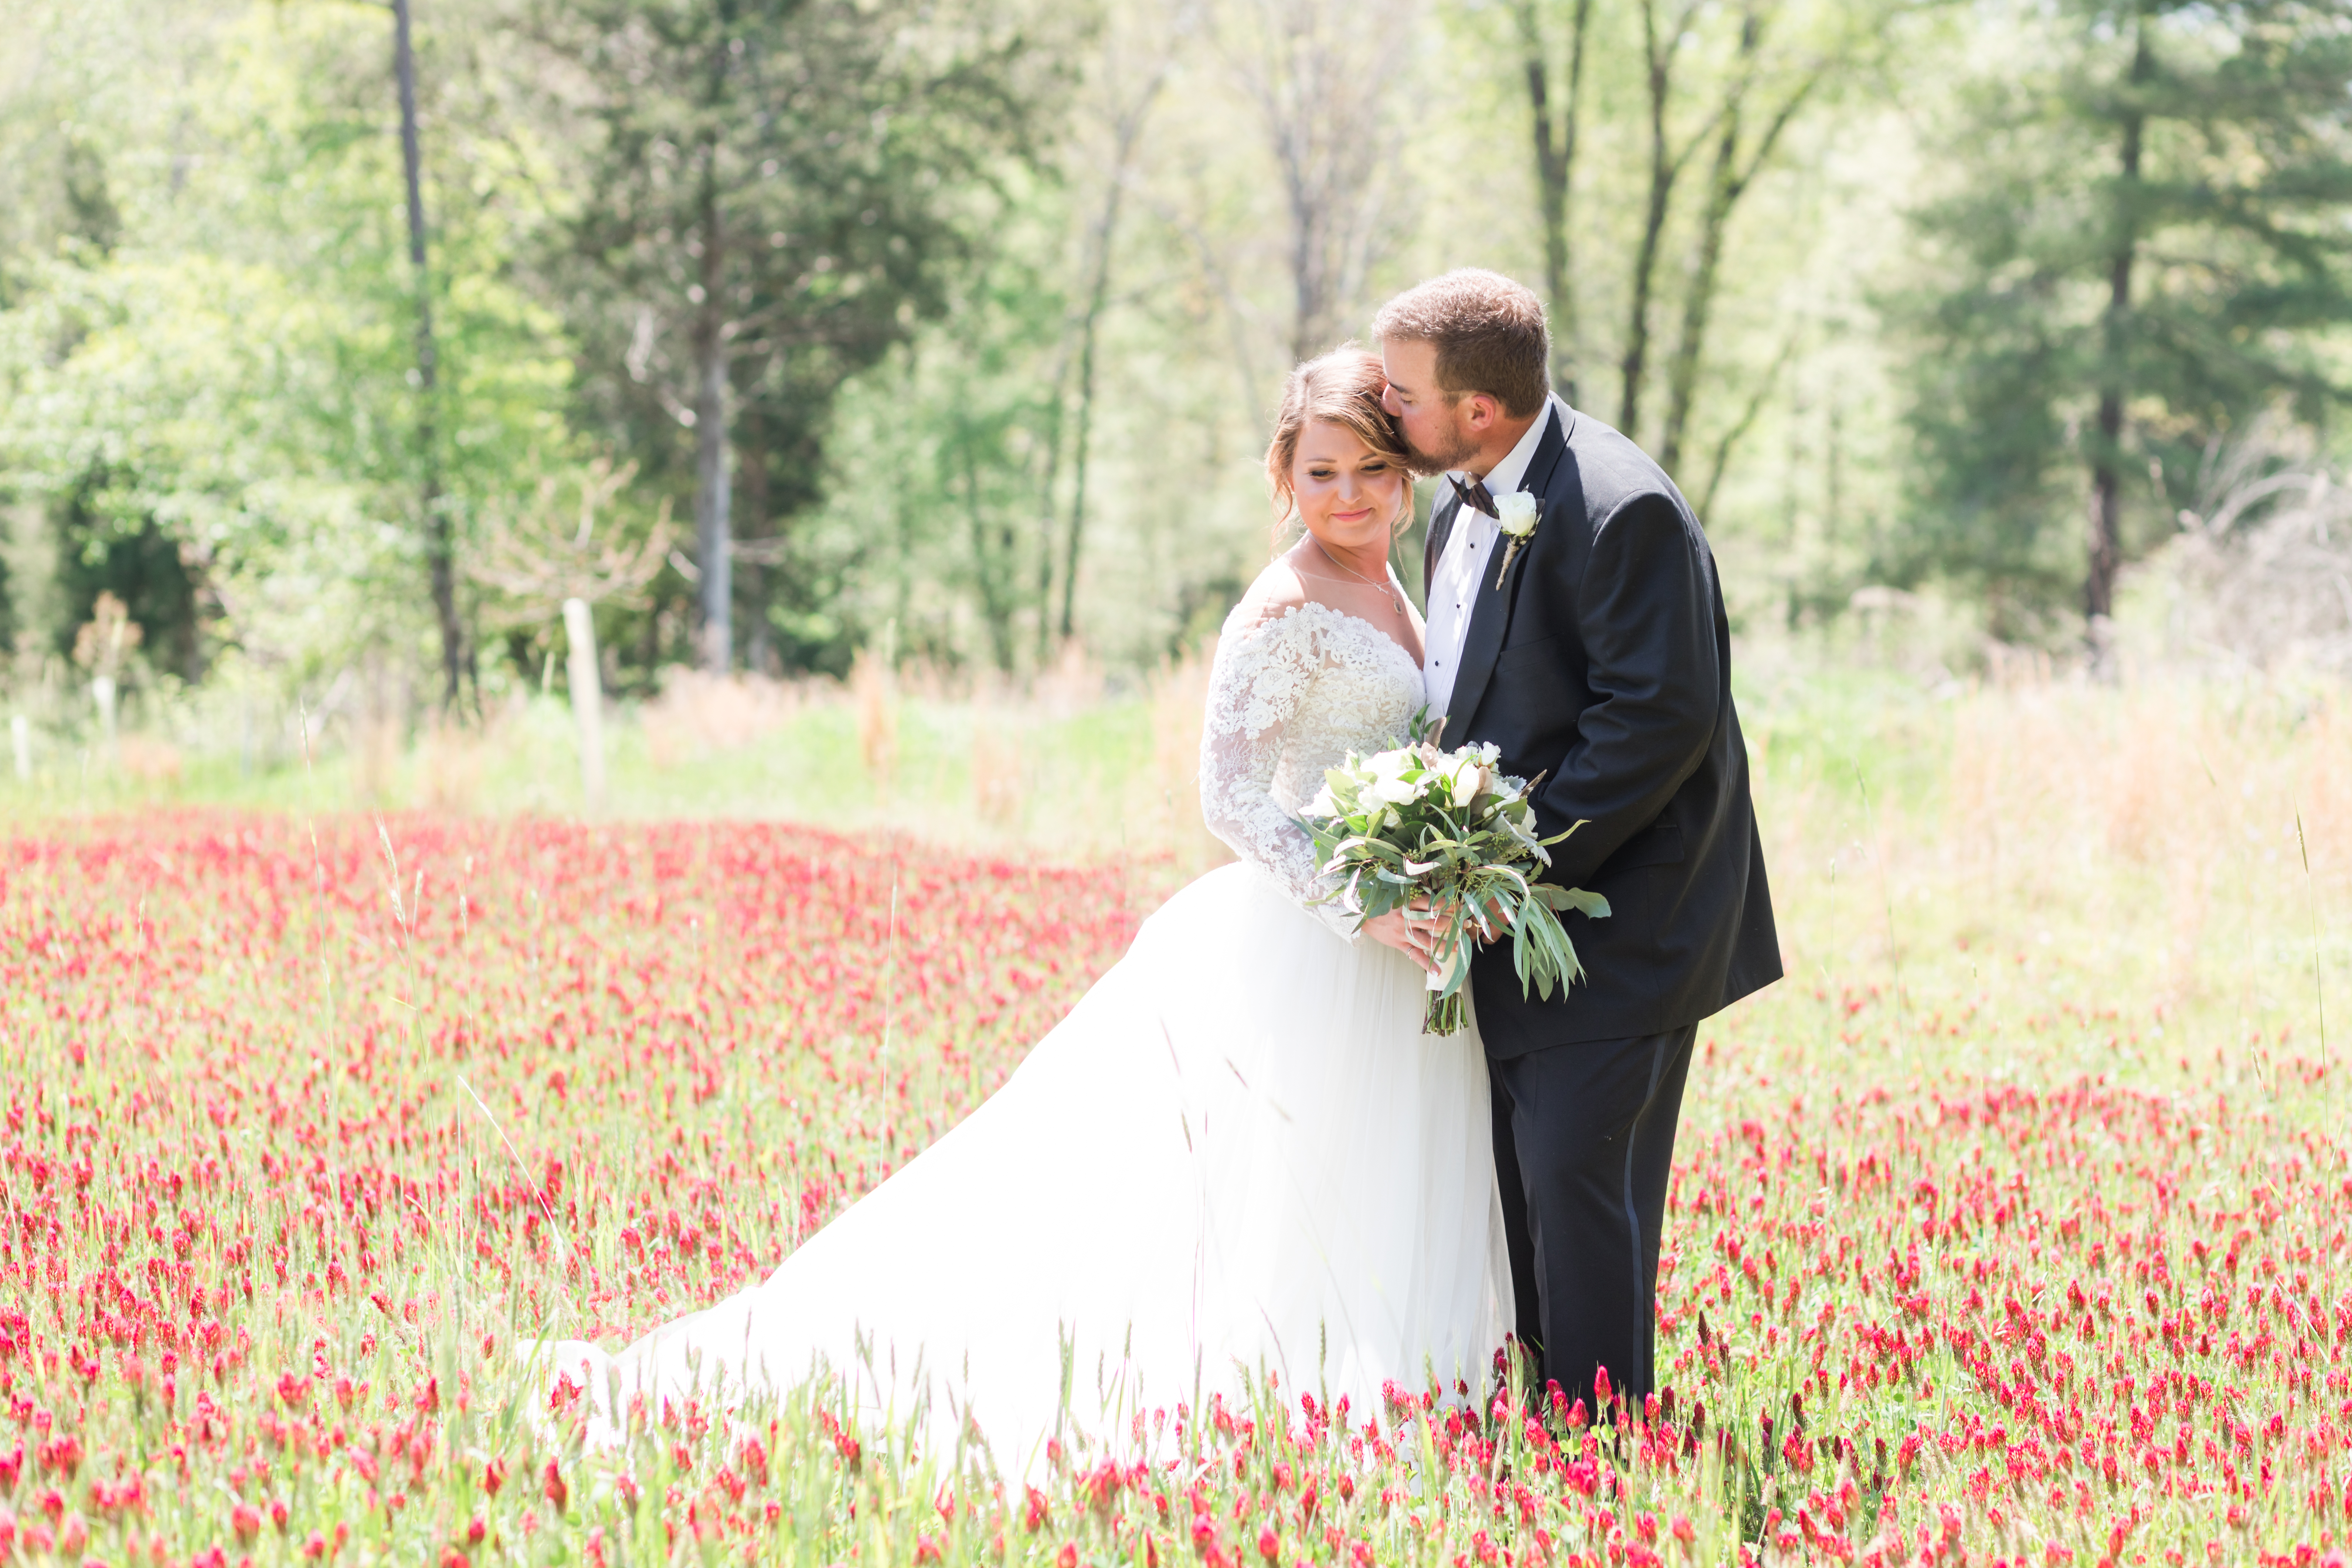 Spartanburg-SC-Outdoor-Wedding-Jenny-Williams-Photography